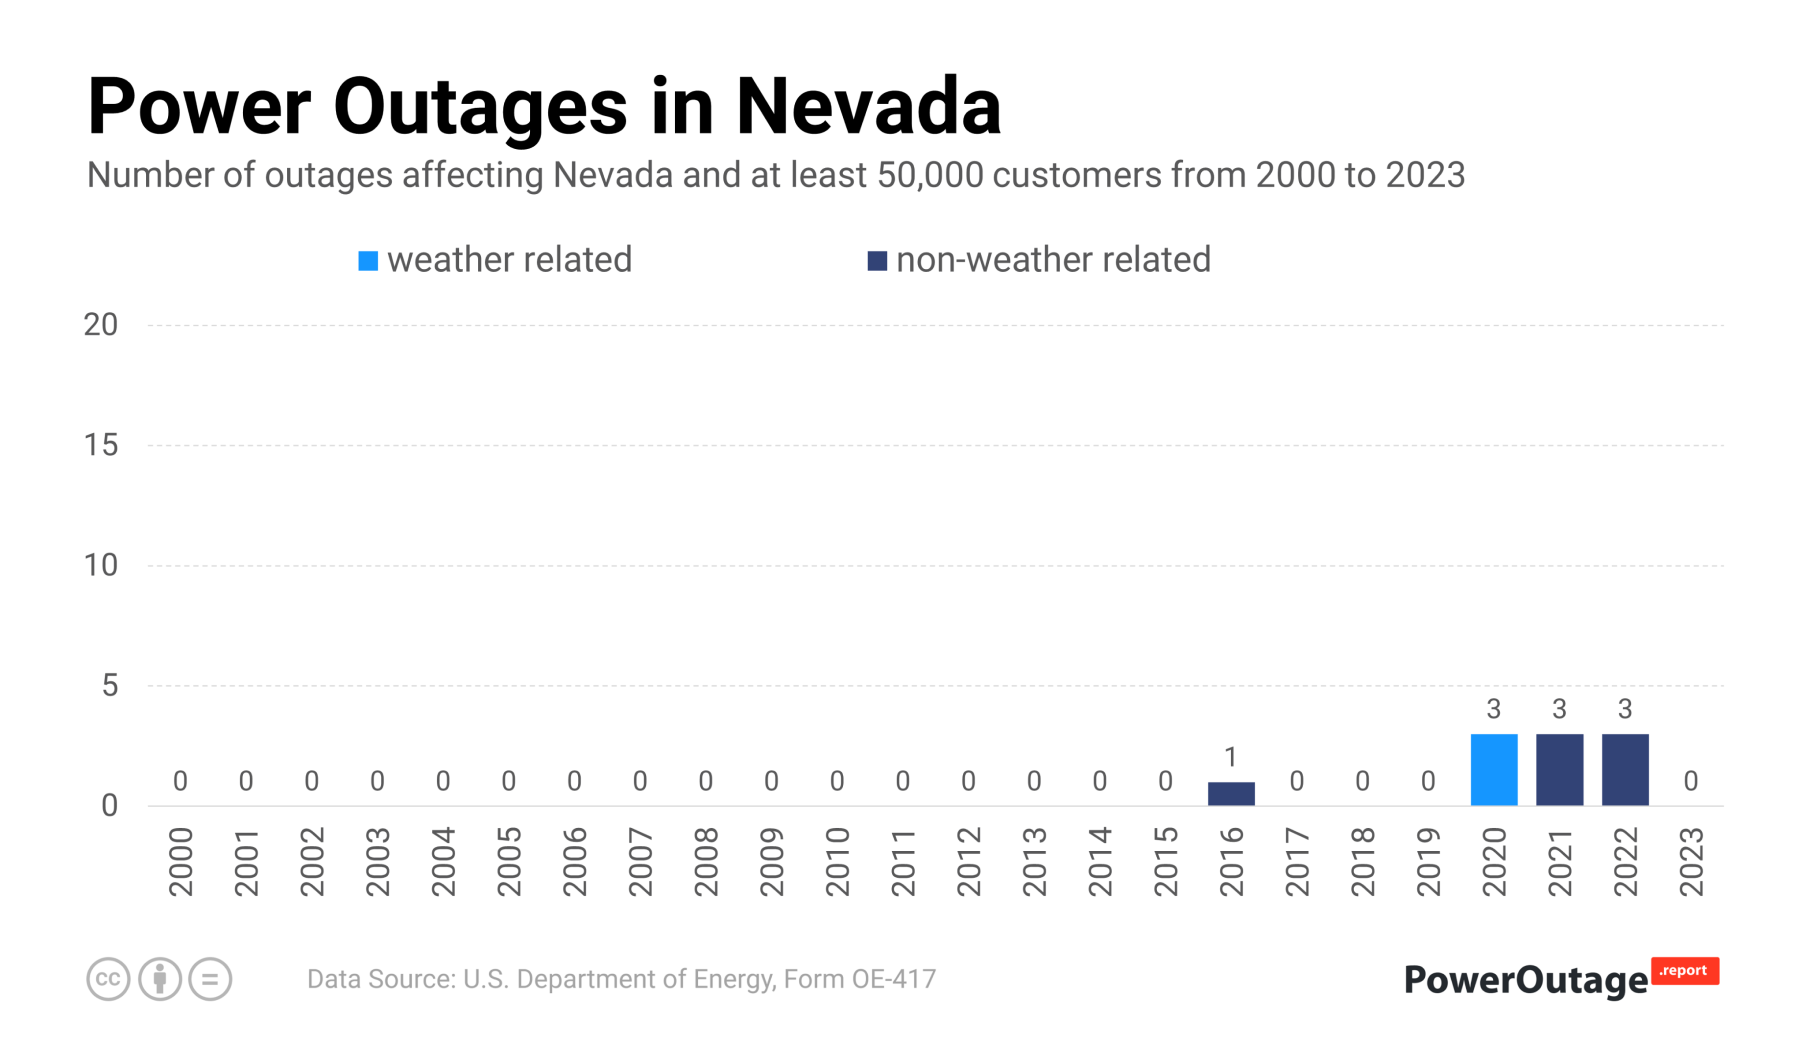 Nevada Power Outage Statistics (2000 - 2022)